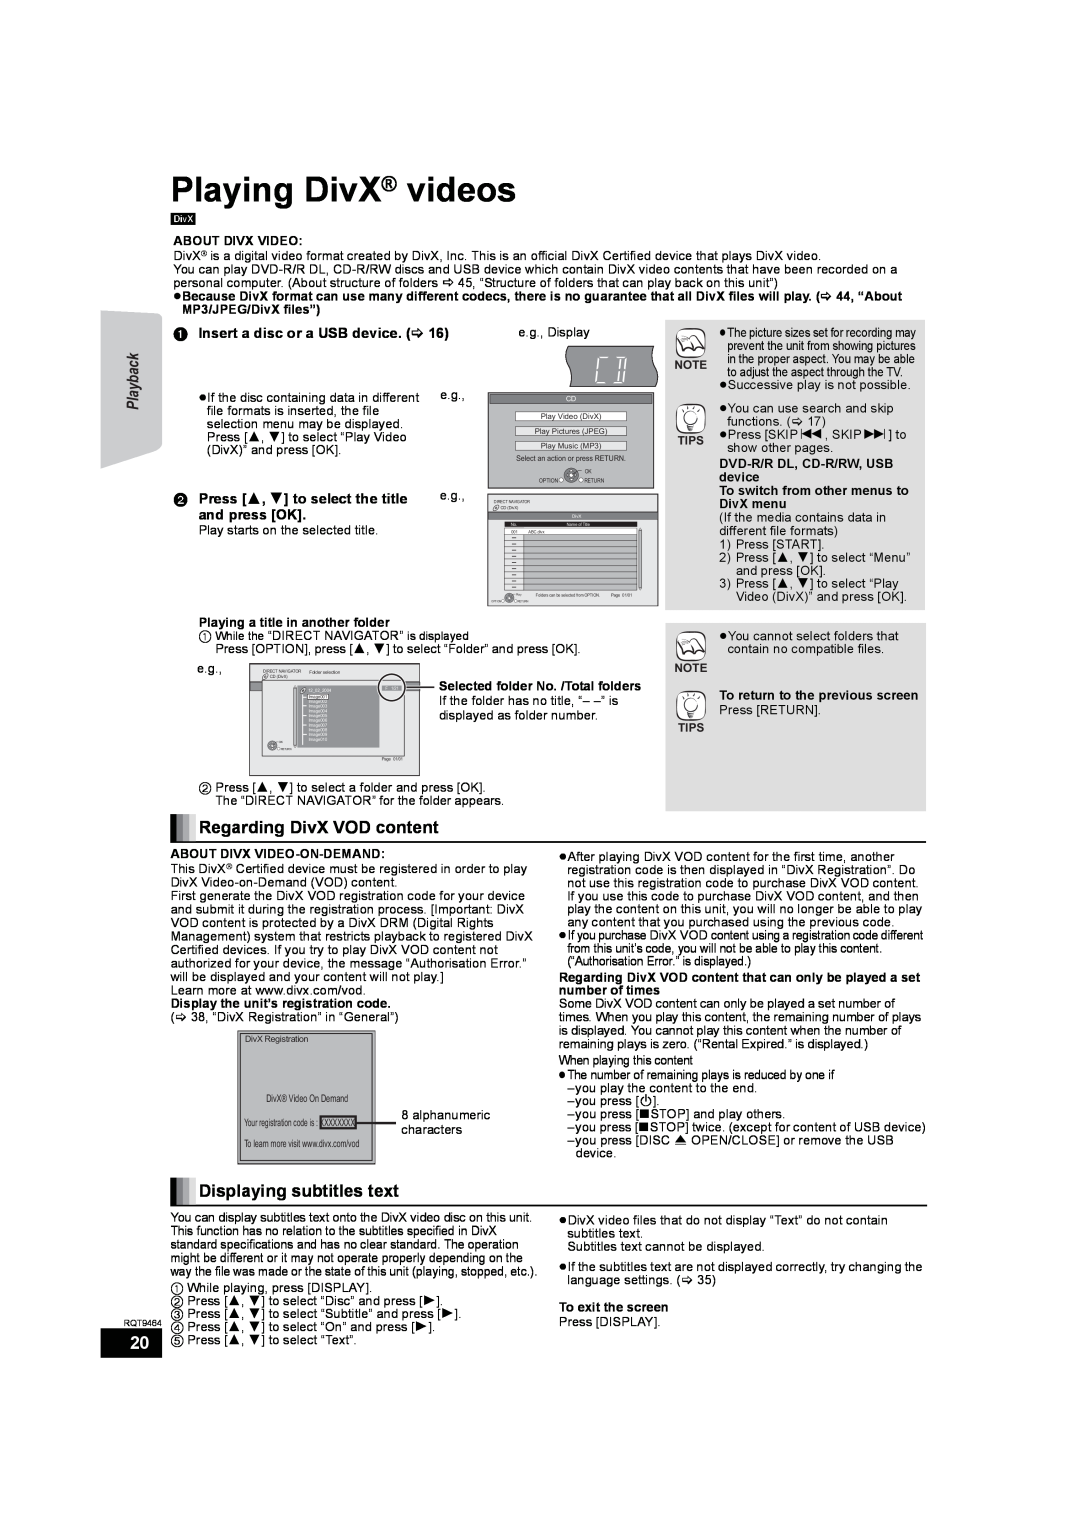 Panasonic SC-BTX70 manual Regarding DivX VOD content, Displaying subtitles text, Playing DivX videos, Playback 